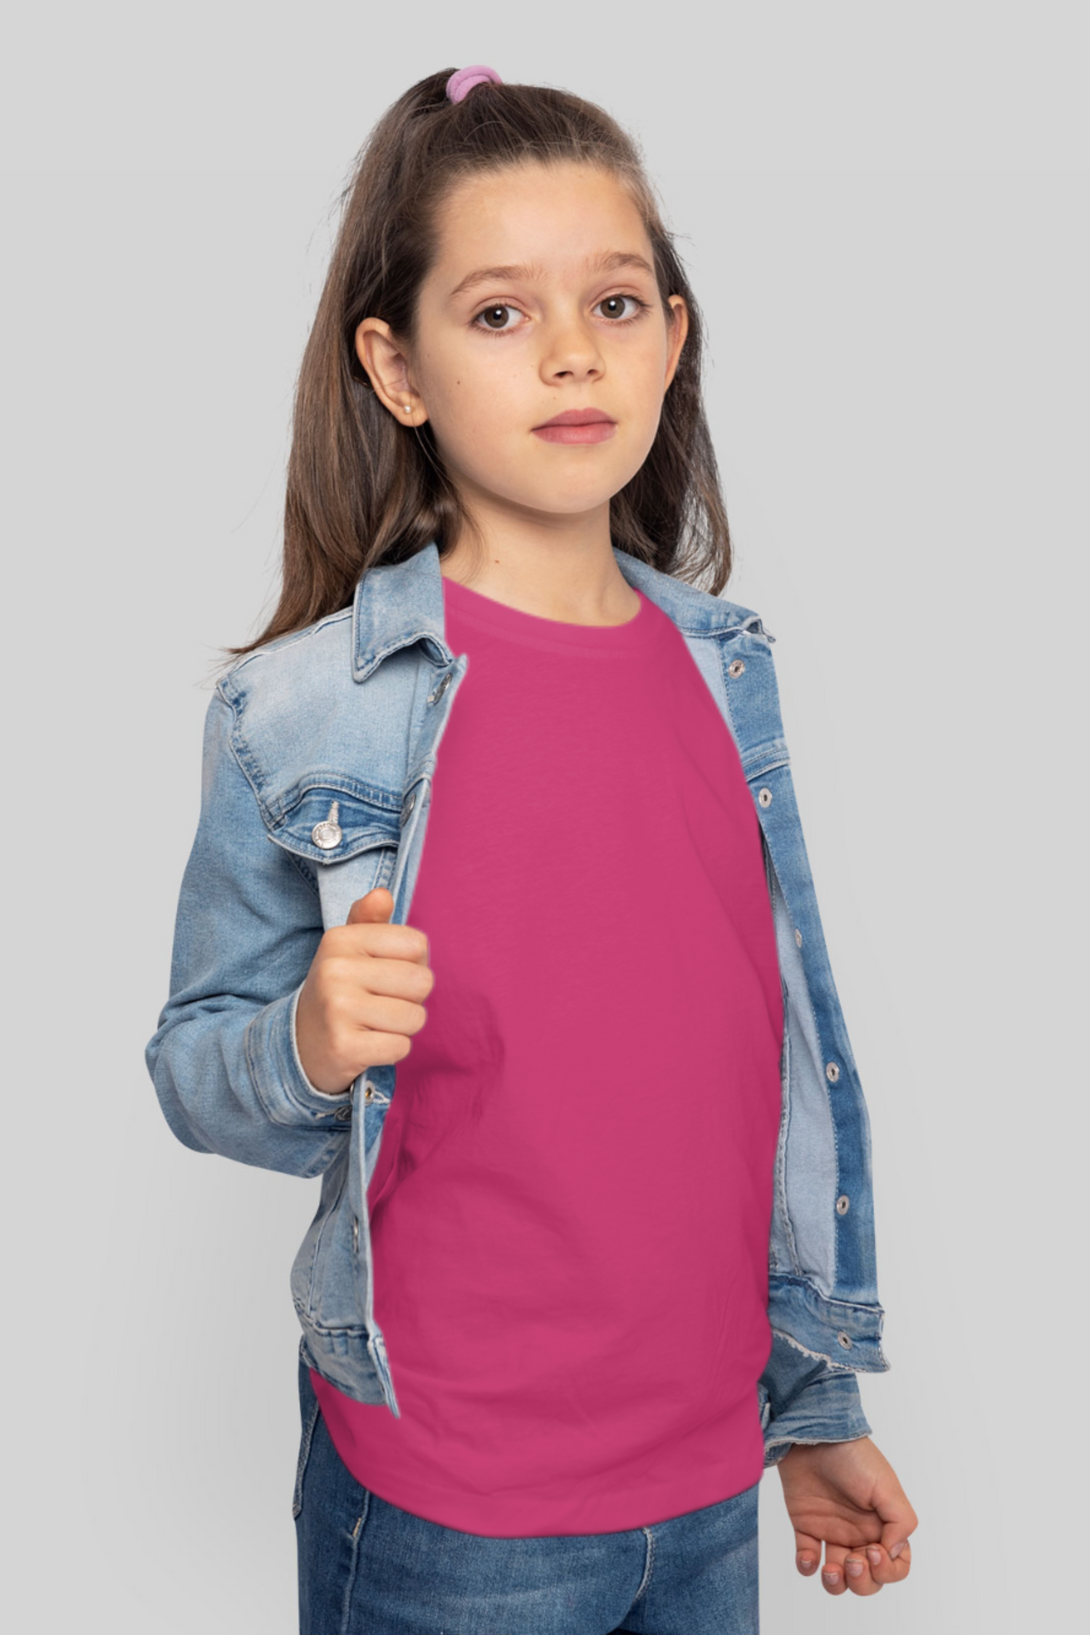 Pink T-Shirt For Girl - WowWaves - 1